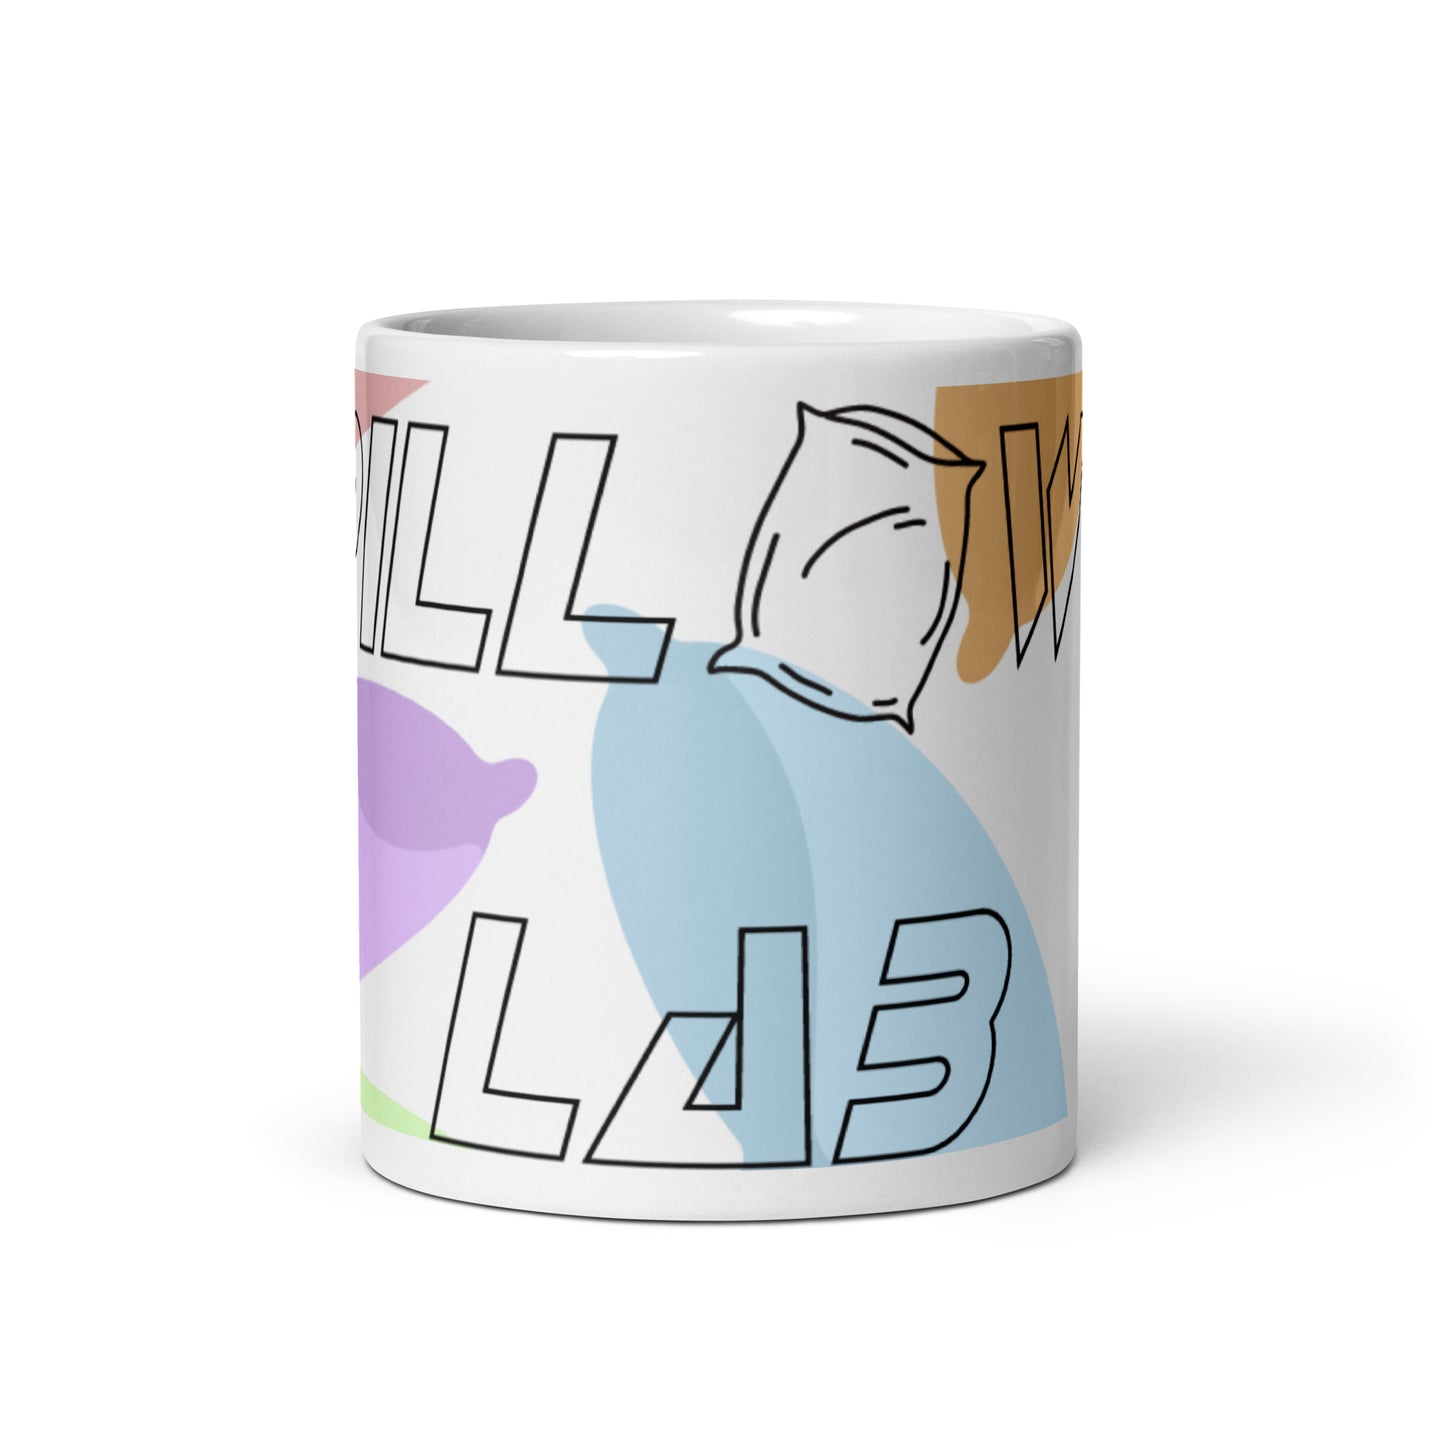 Pillow Lab mug